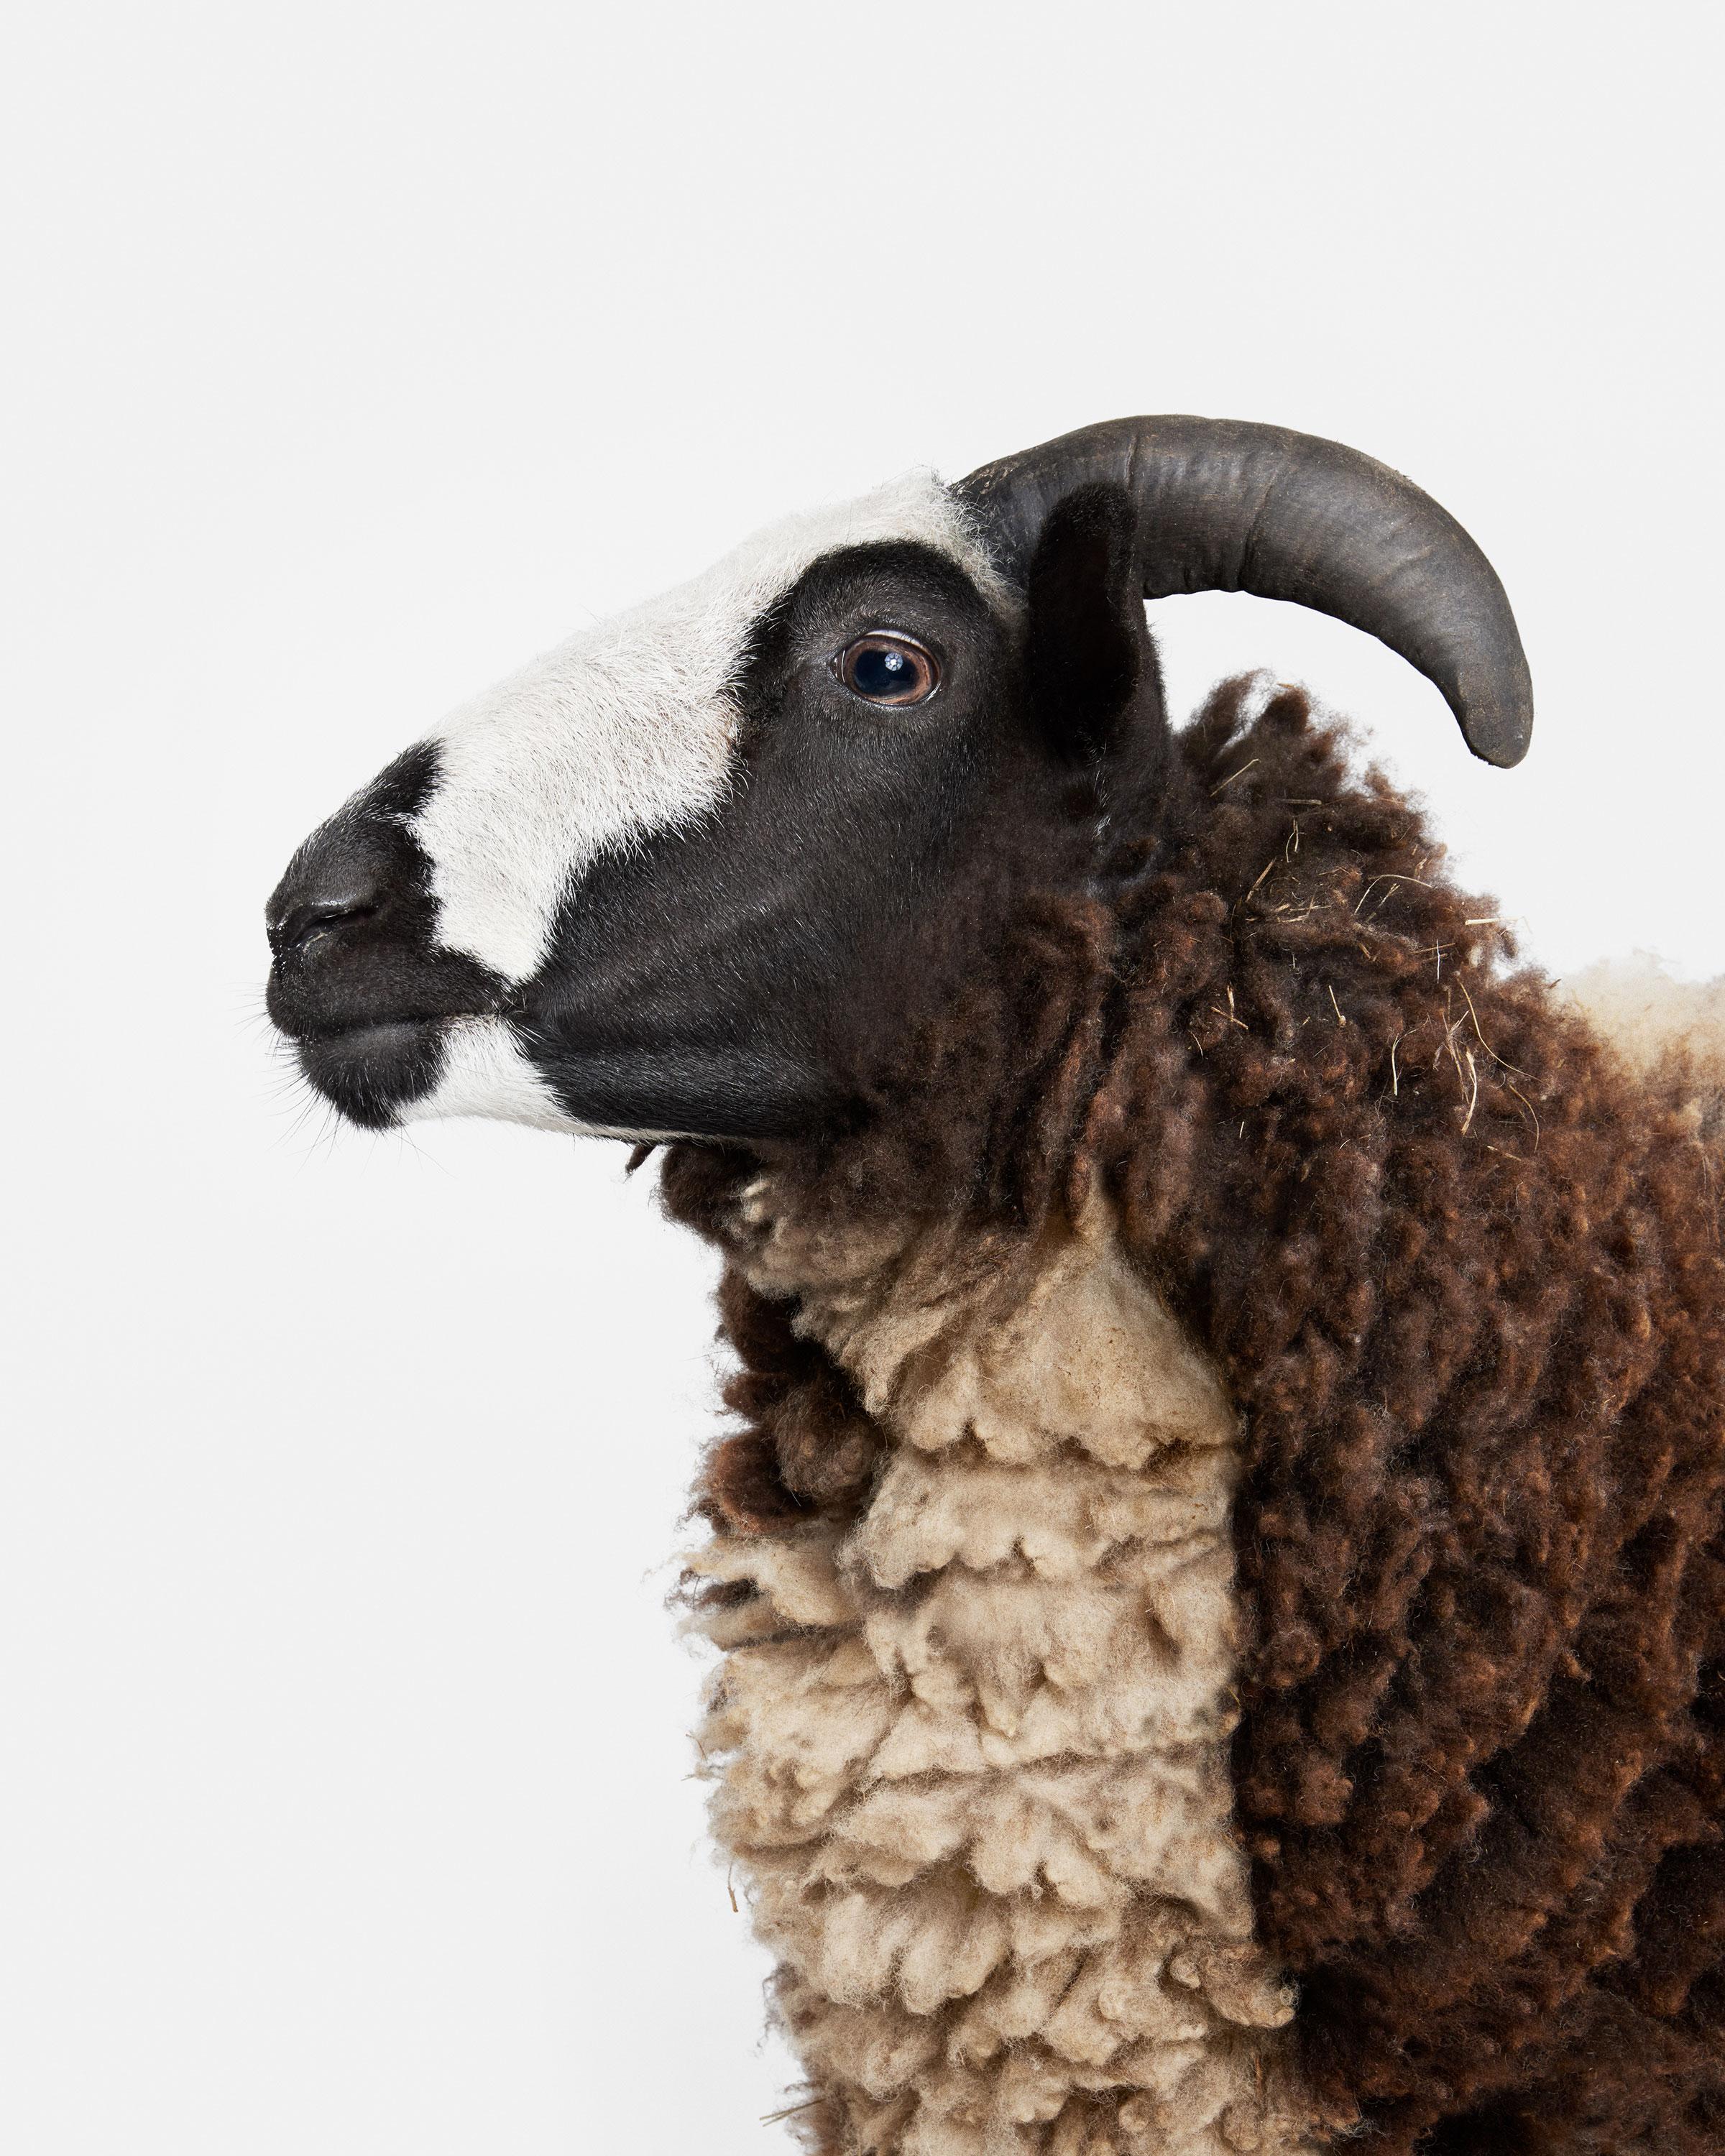 Randal Ford - Jacob Sheep No. 1, Photography 2018, Printed After